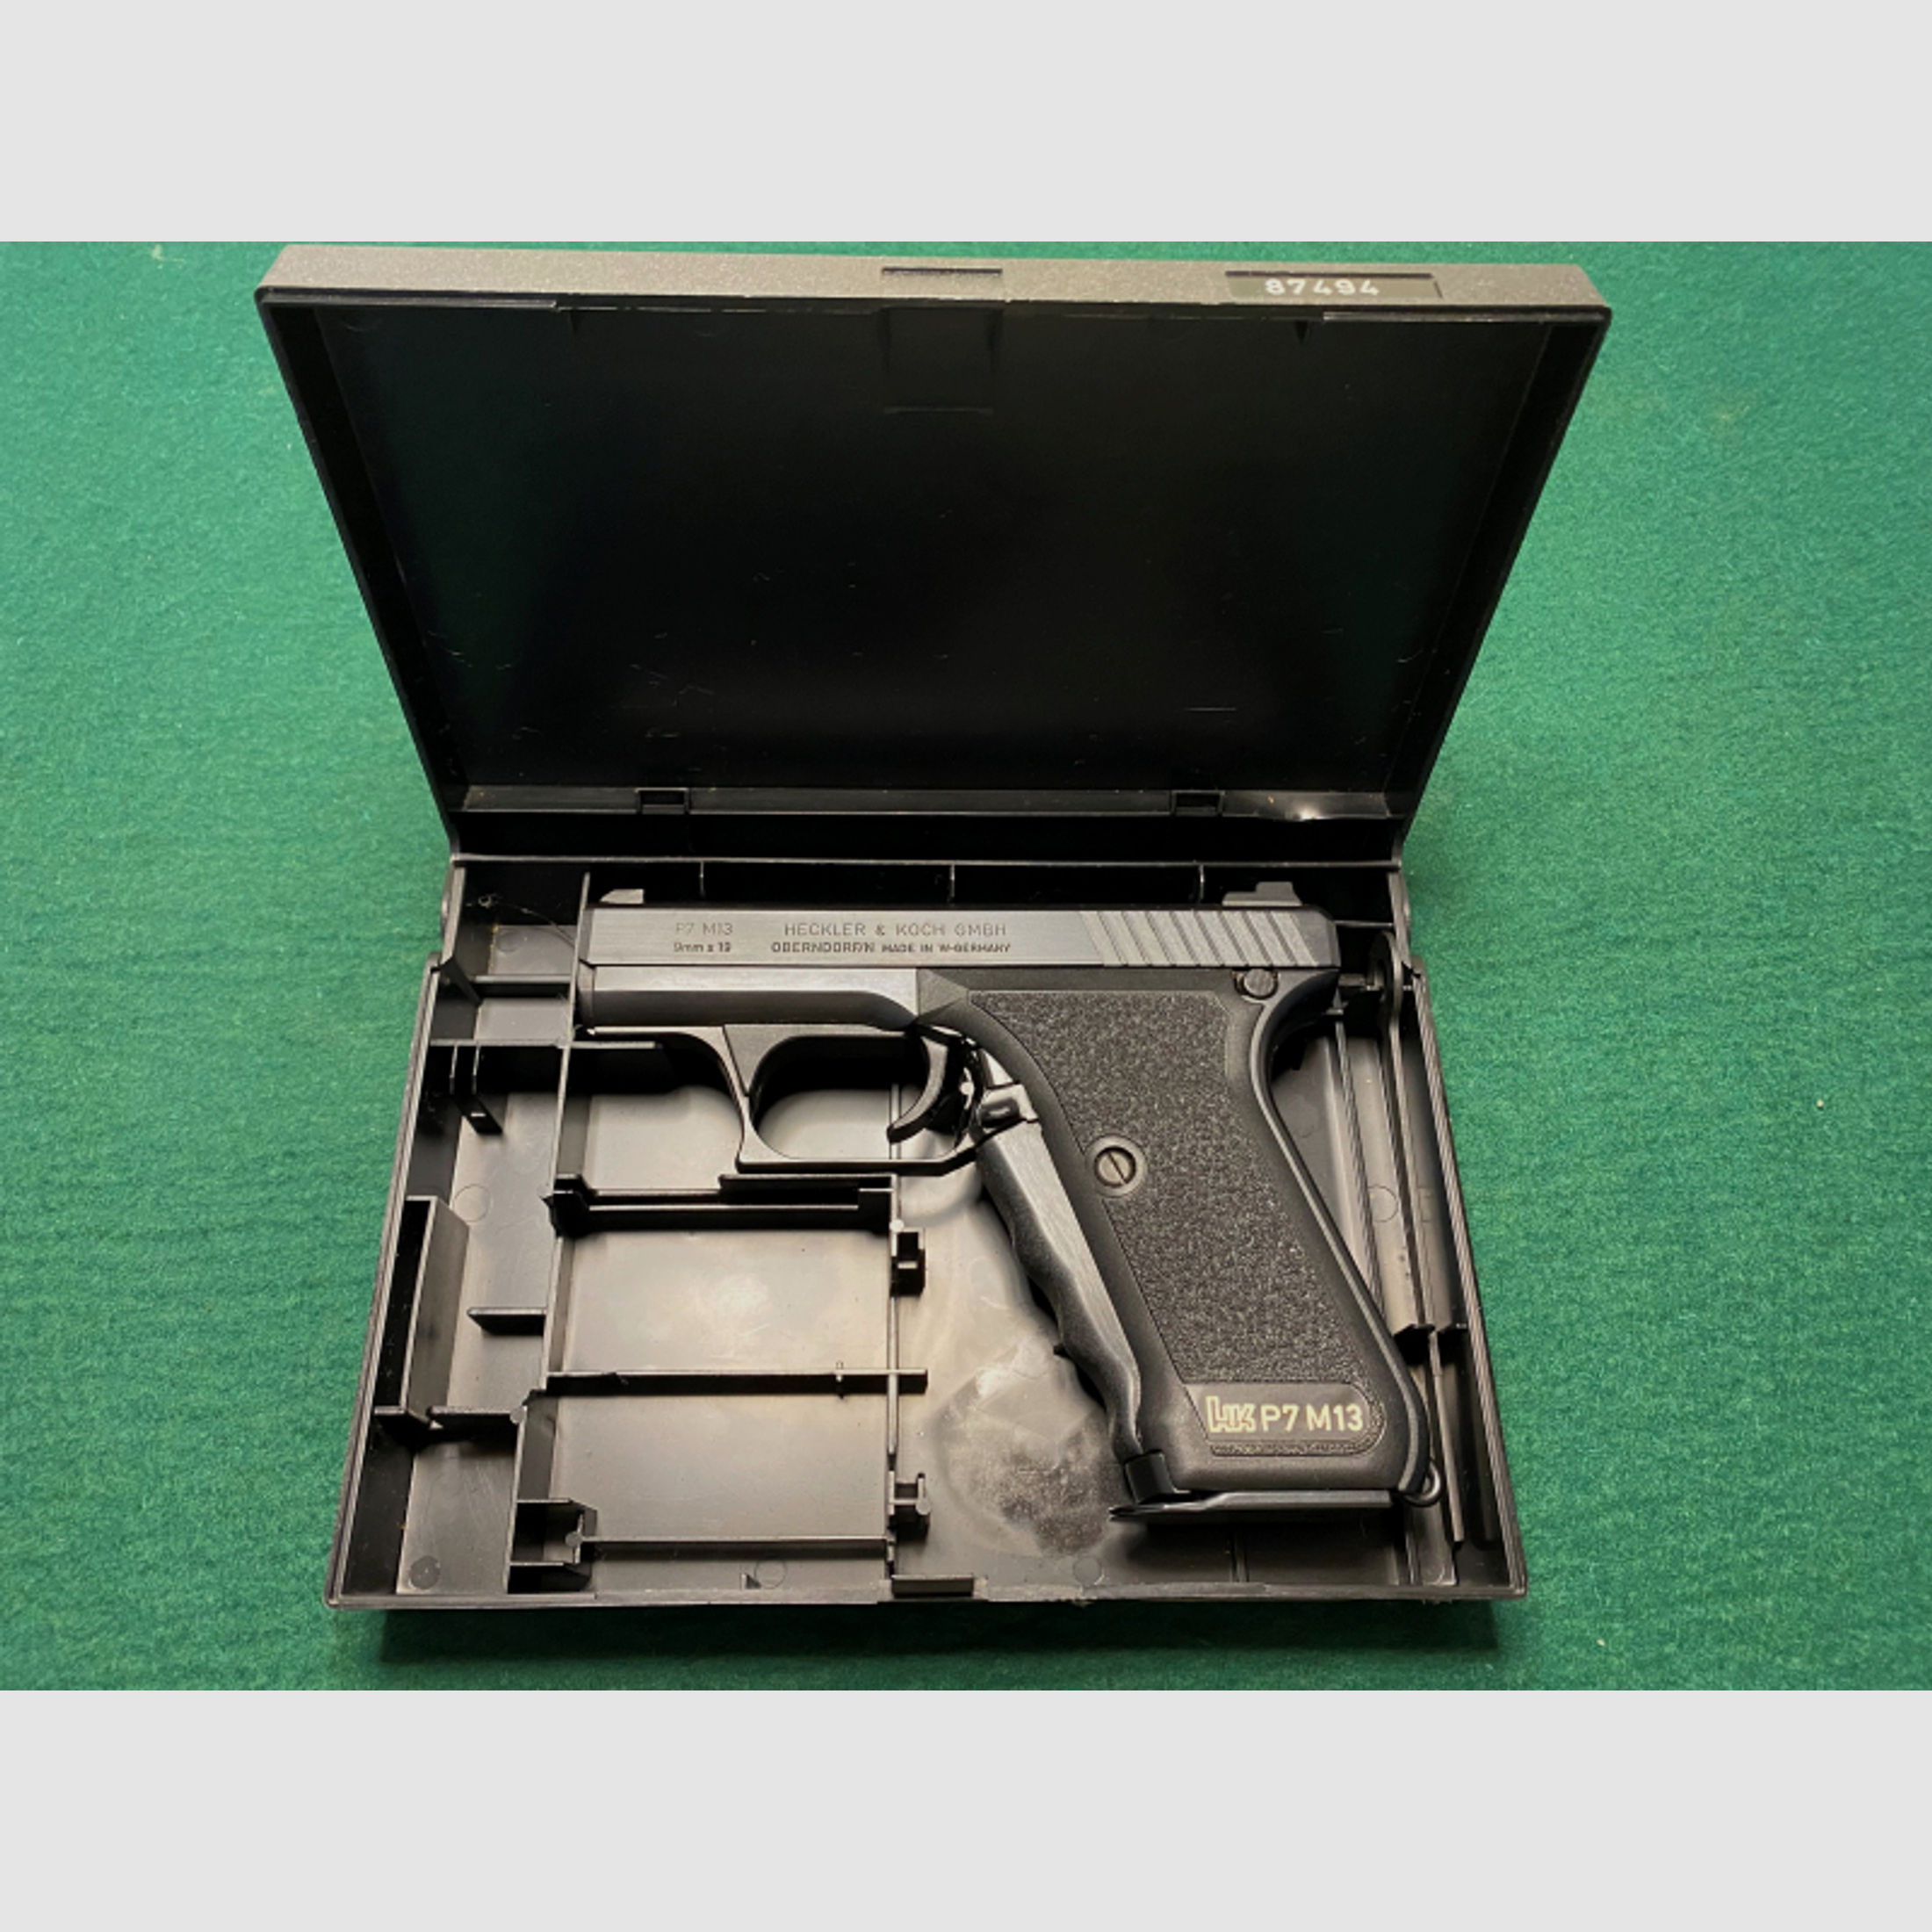 Heckler & Koch Pistole P7 M13 im Kaliber 9mm Luger